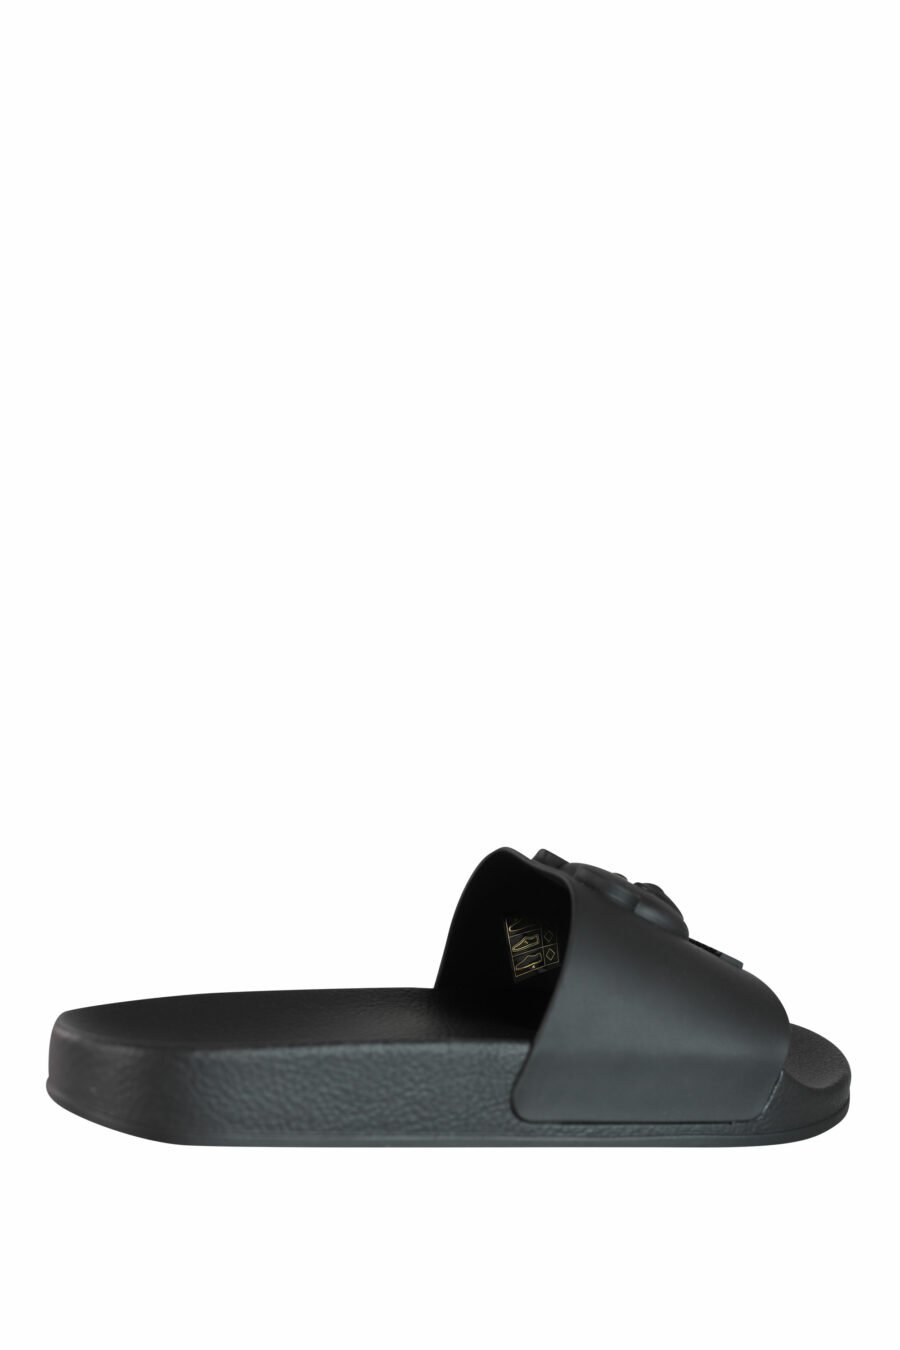 Black flip flops with monochrome embossed maxilogo - IMG 3574